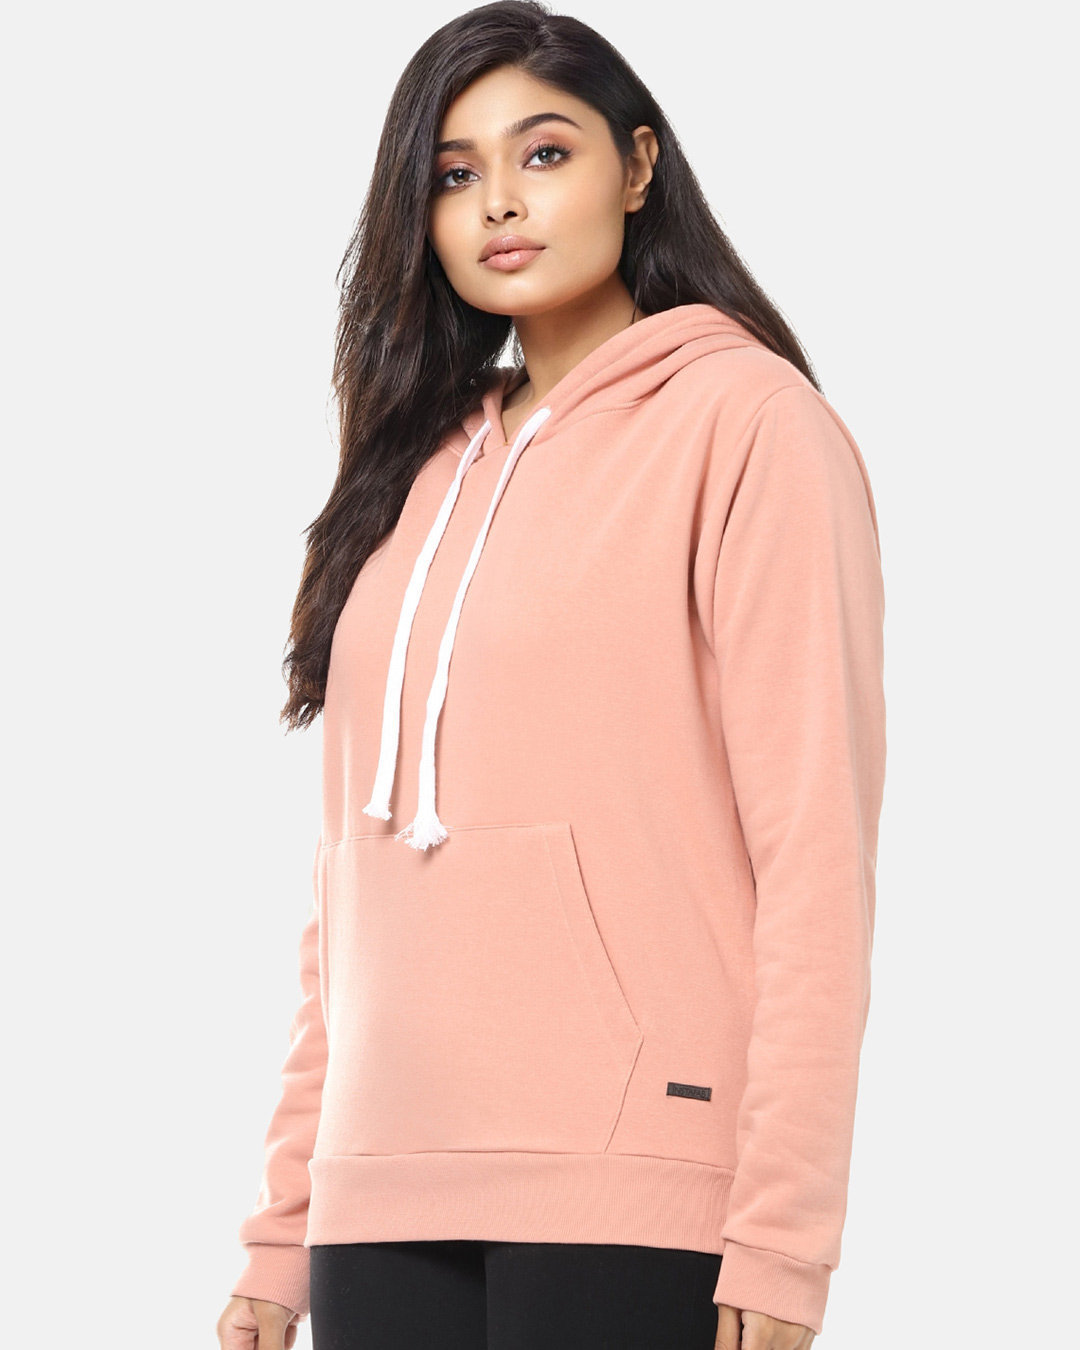 Shop Women's Plus Size Solid Stylish Casual Winter Hooded Sweatshirt-Back